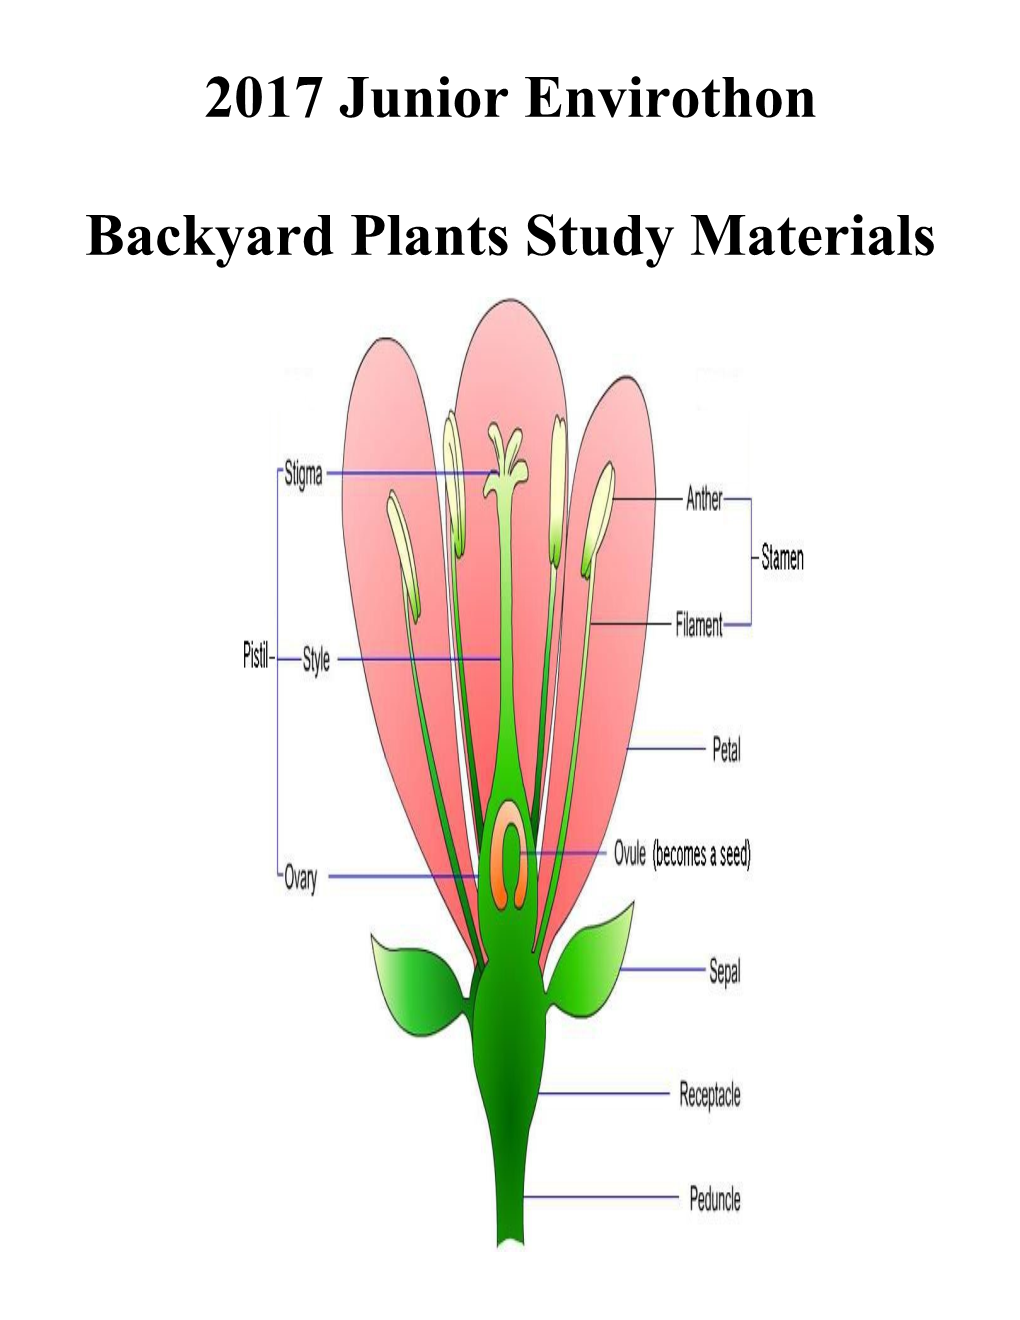 Backyard Plants Study Materials